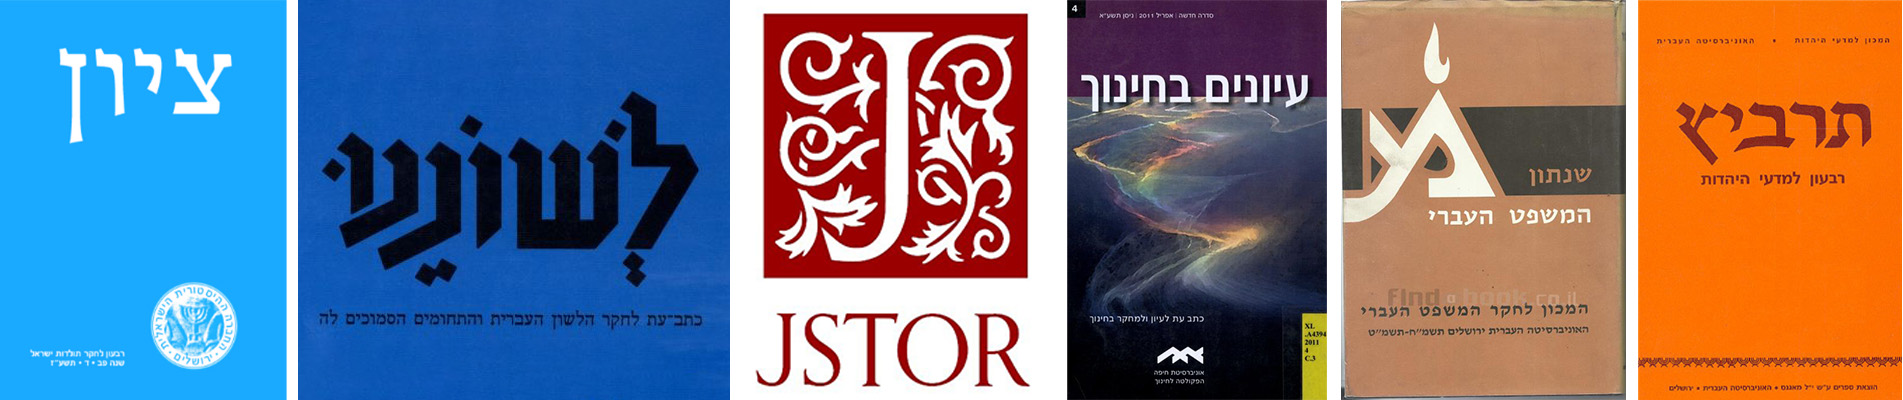 JSTOR: עיון בכתבי העת מבניין הספרייה